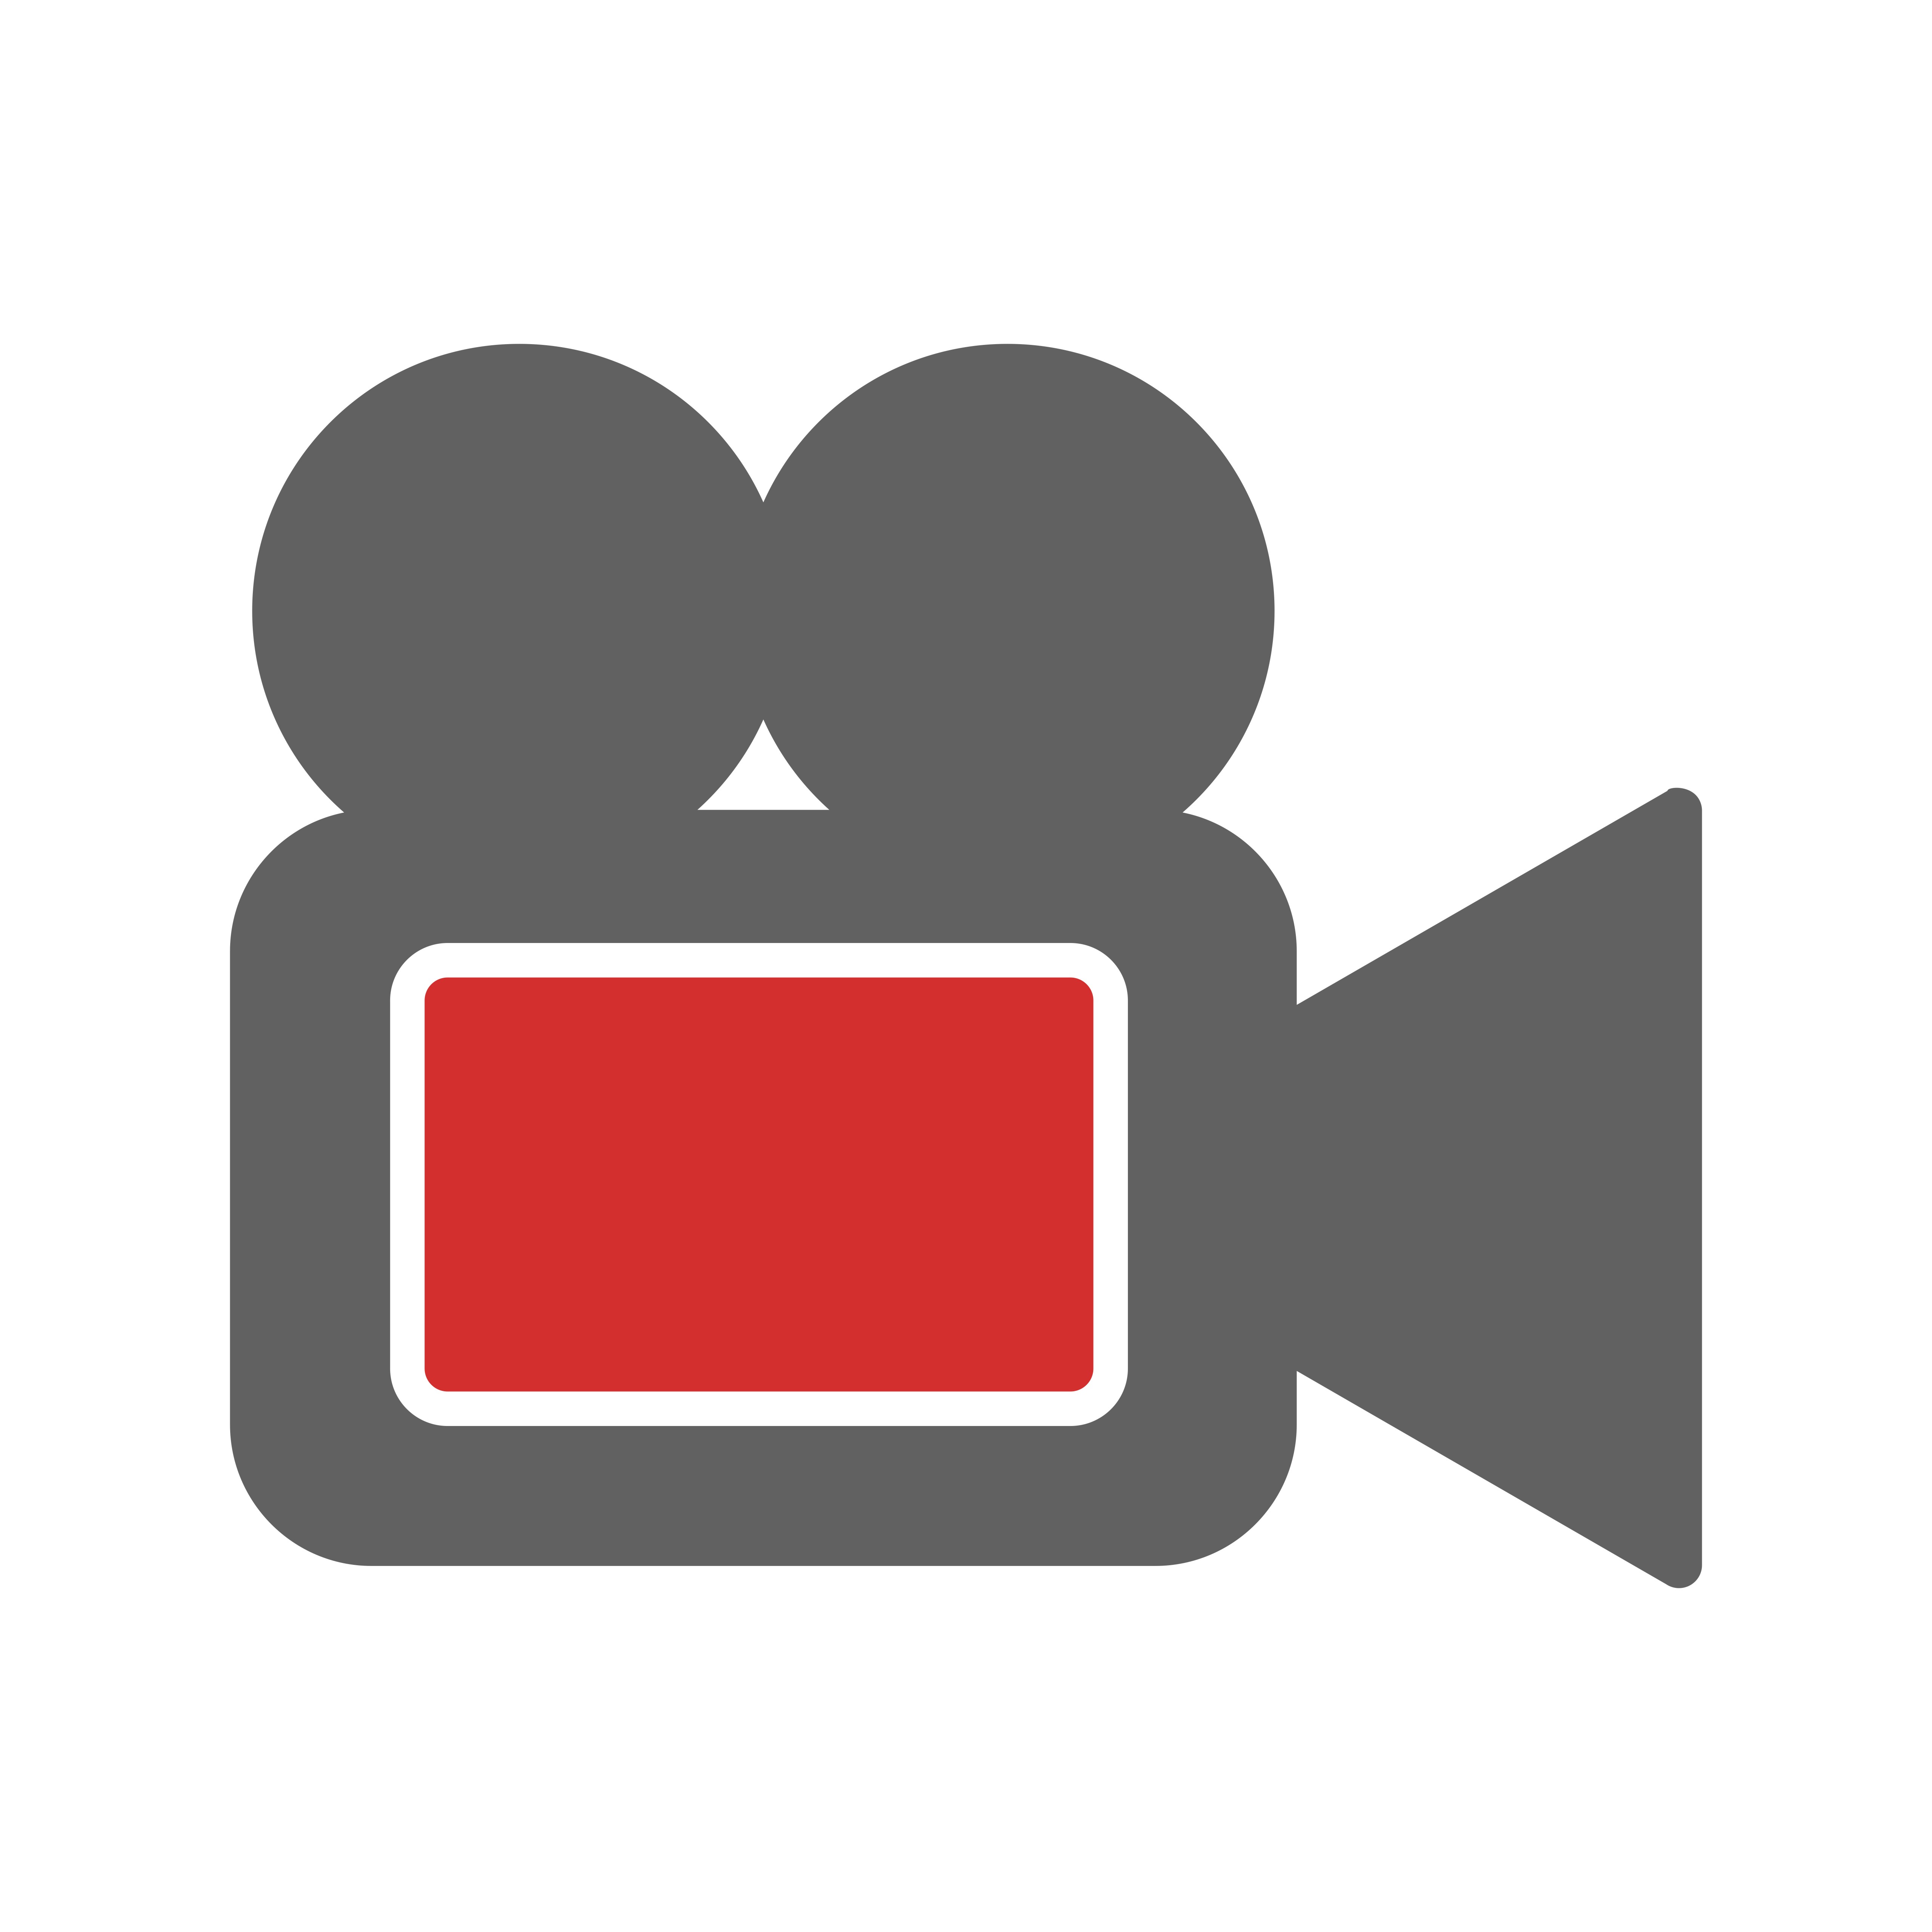 Video Camera Icon Design 496903 Download Free Vectors